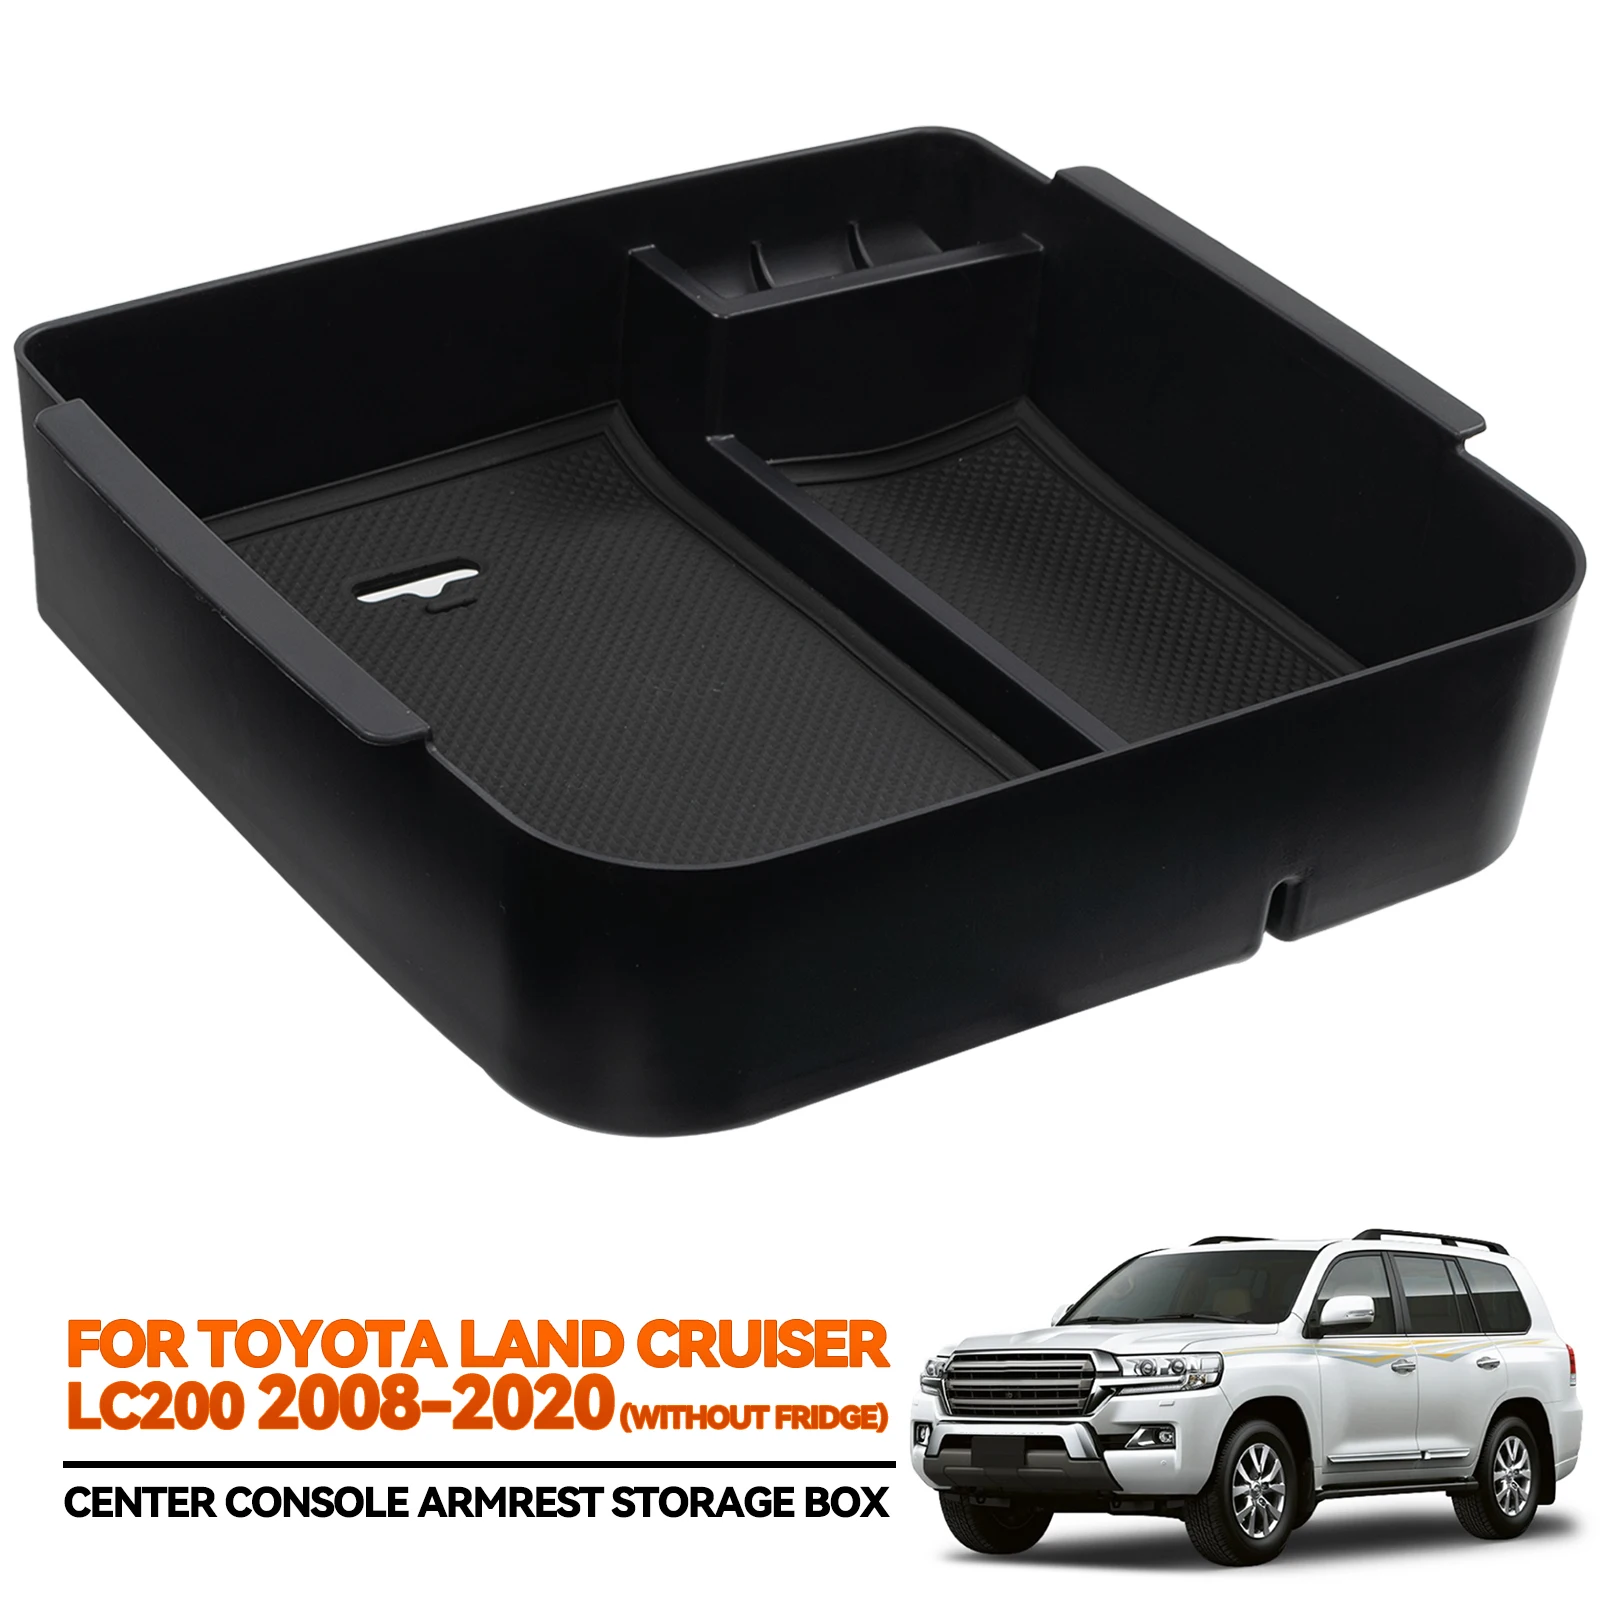 

For Toyota Land Cruiser LC200 J200 Lexus LX570 2008-2020 Interior Armrest Organizer Storage Box Container Pallet Center Console